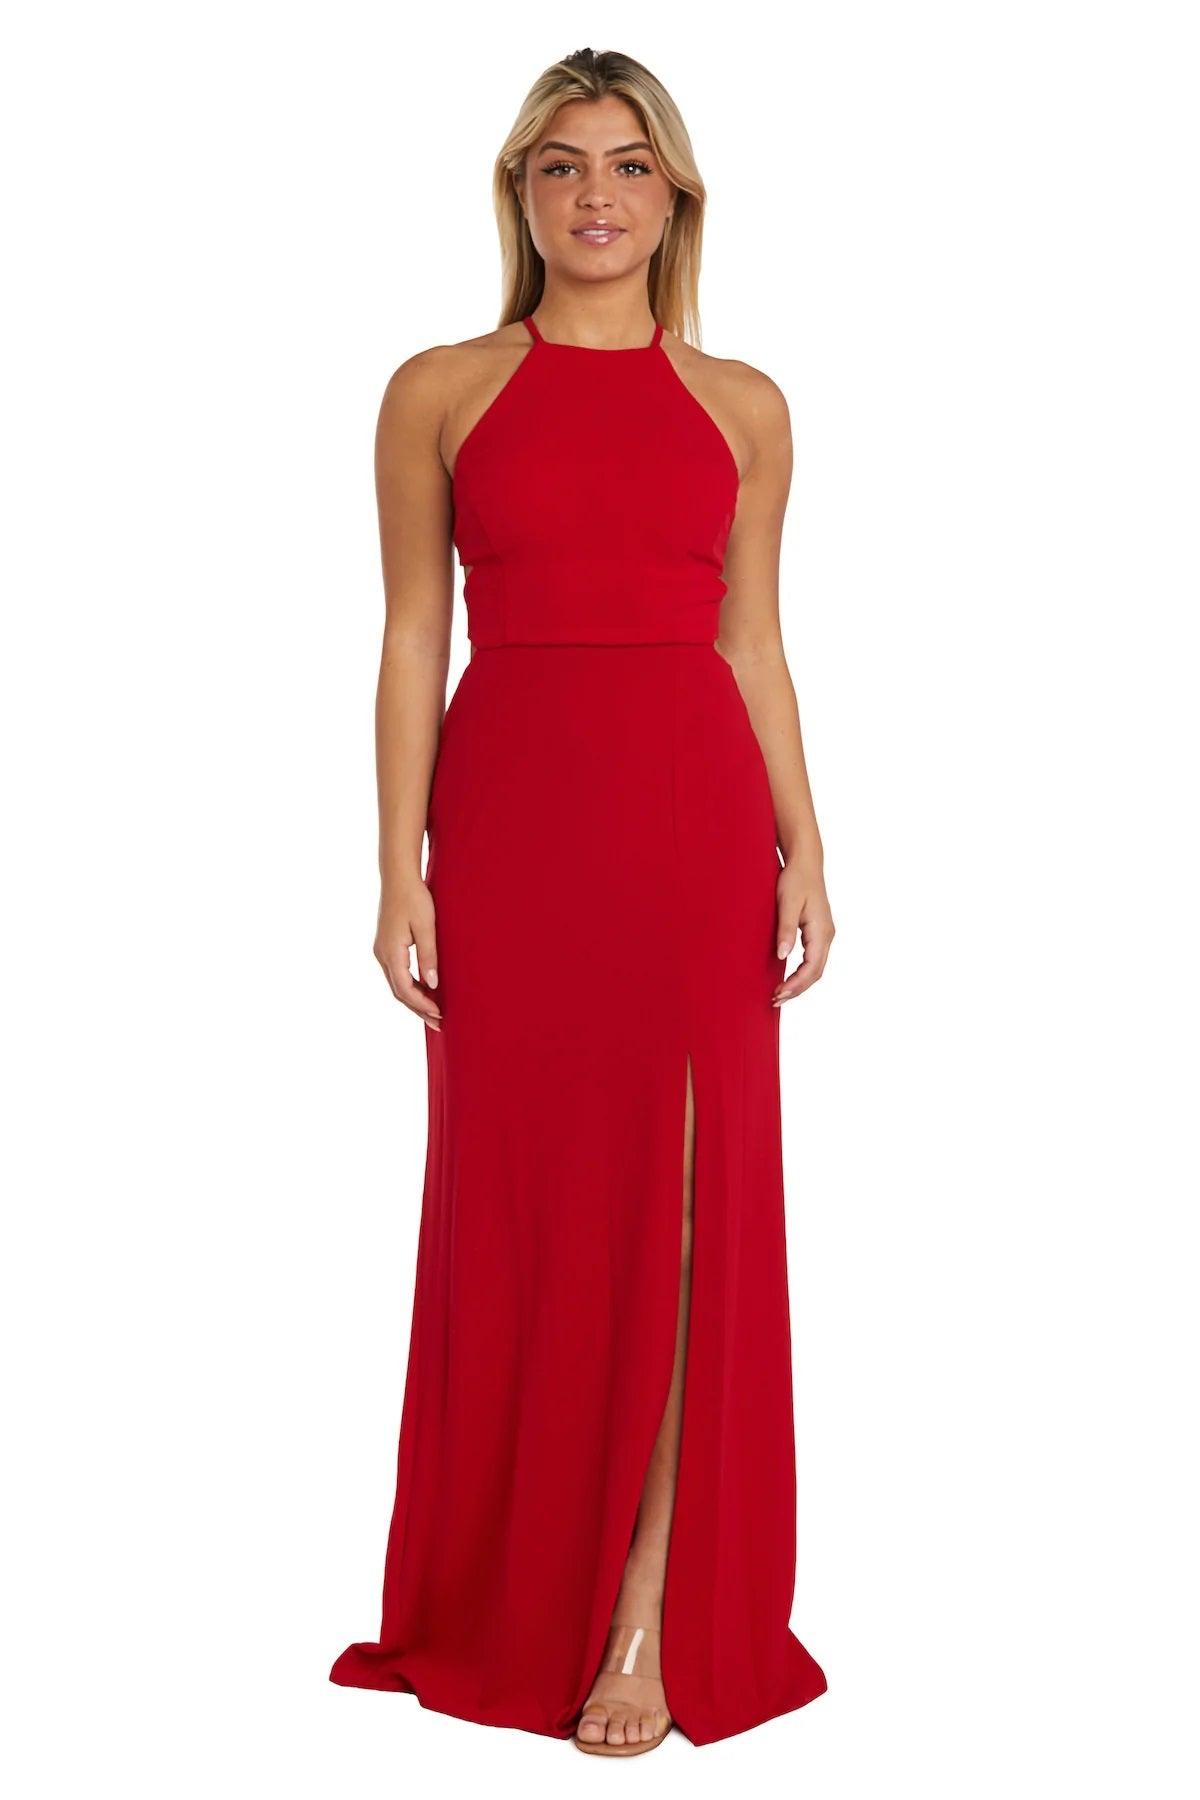 Morgan & Co Long Formal Halter Prom Dress 13025 - The Dress Outlet